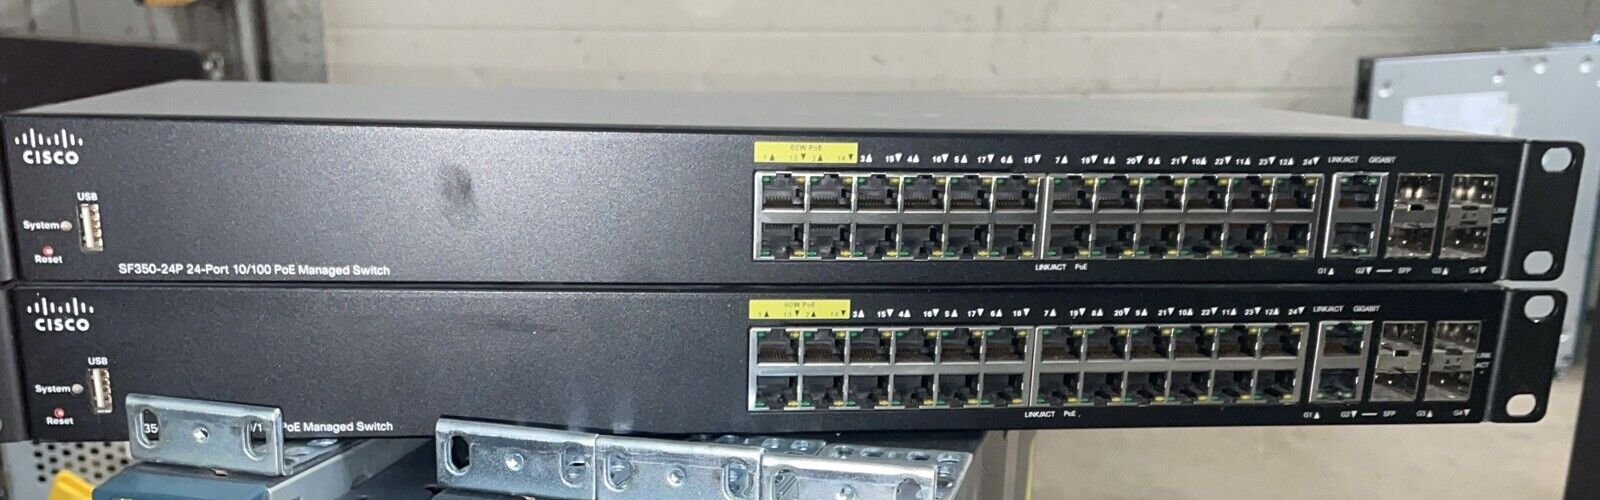 Cisco SF350-24P 24-Port 10/100 PoE Managed Ethernet Switch SF350-24P-K9 V02